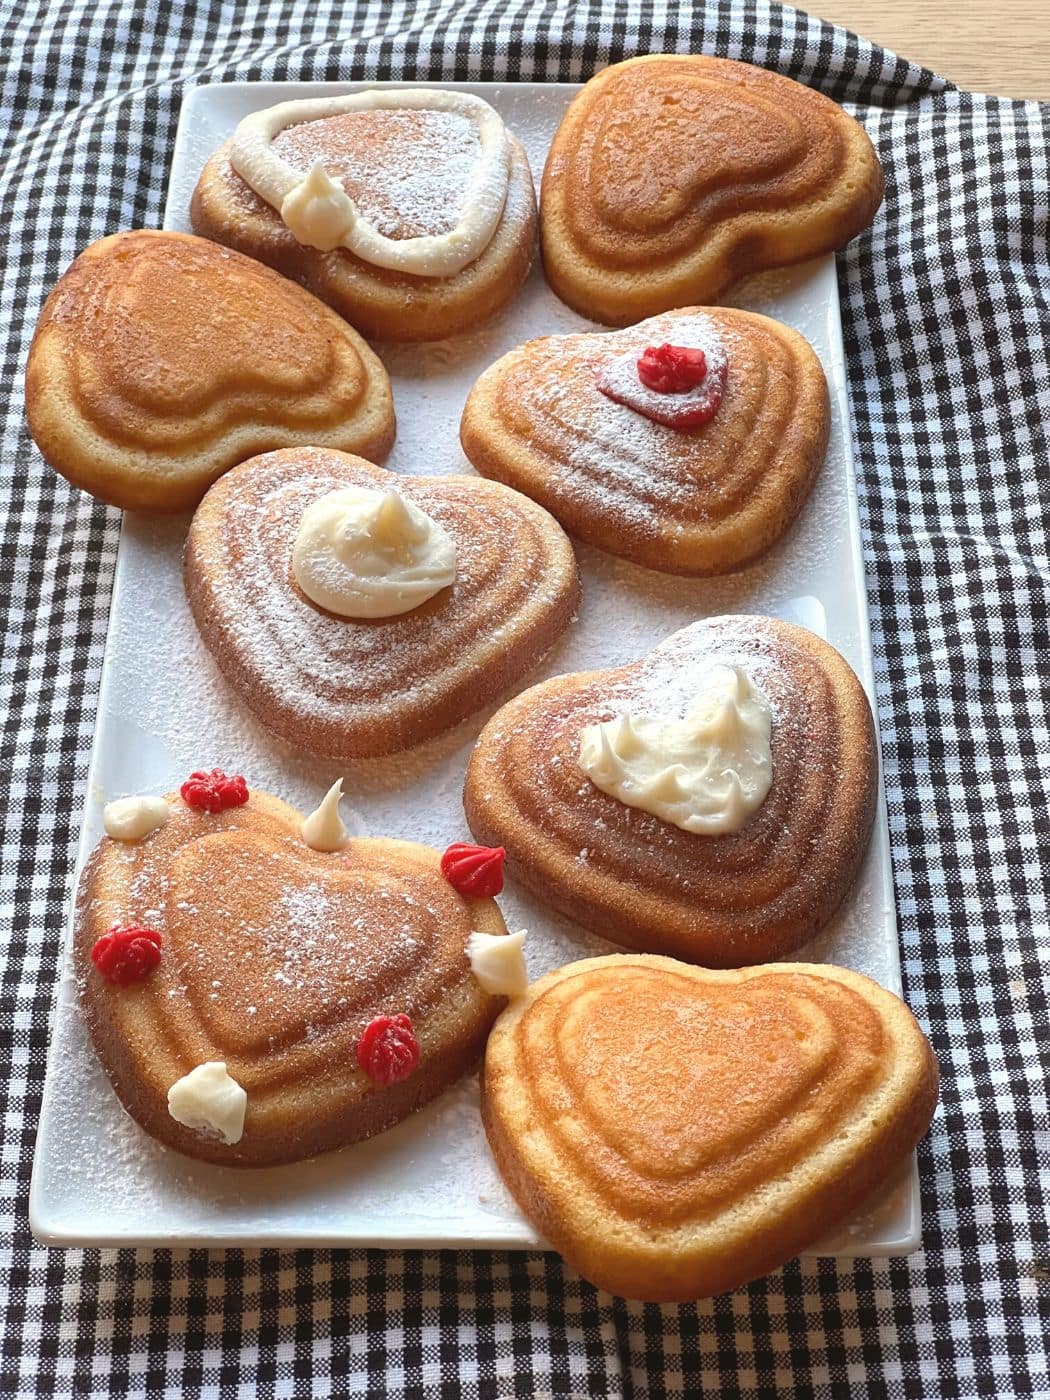 Decorated mini heart cakes.